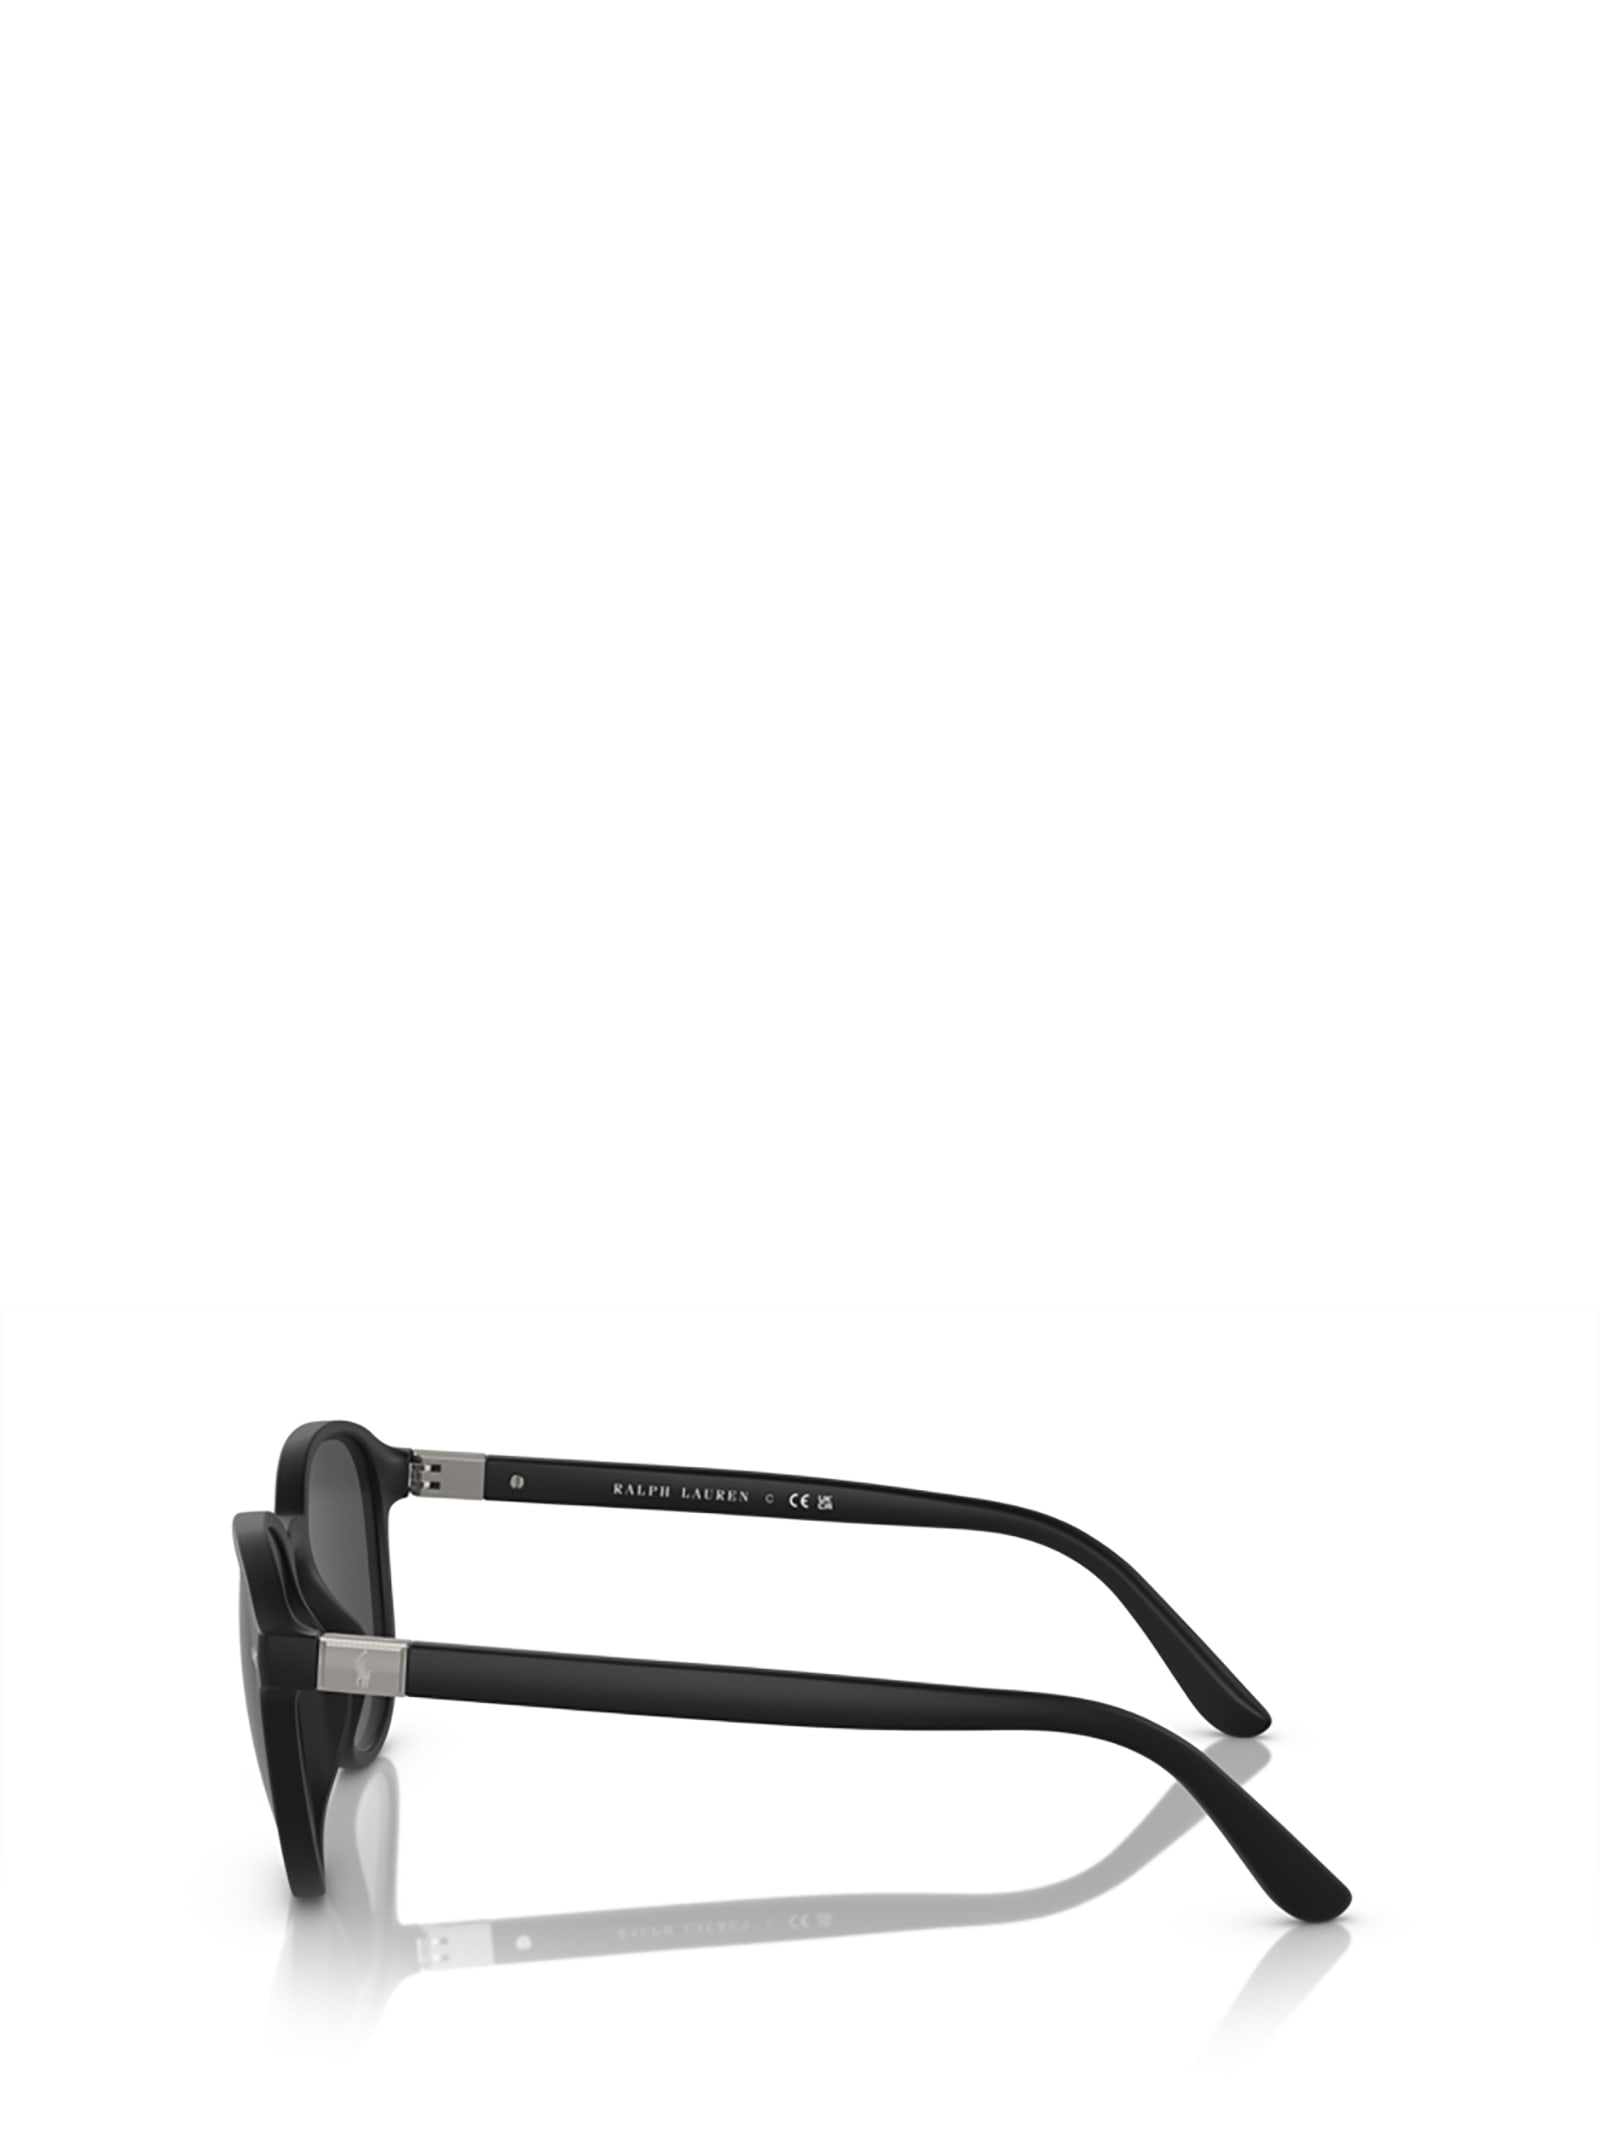 Shop Polo Ralph Lauren Ph4207u Matte Black Sunglasses